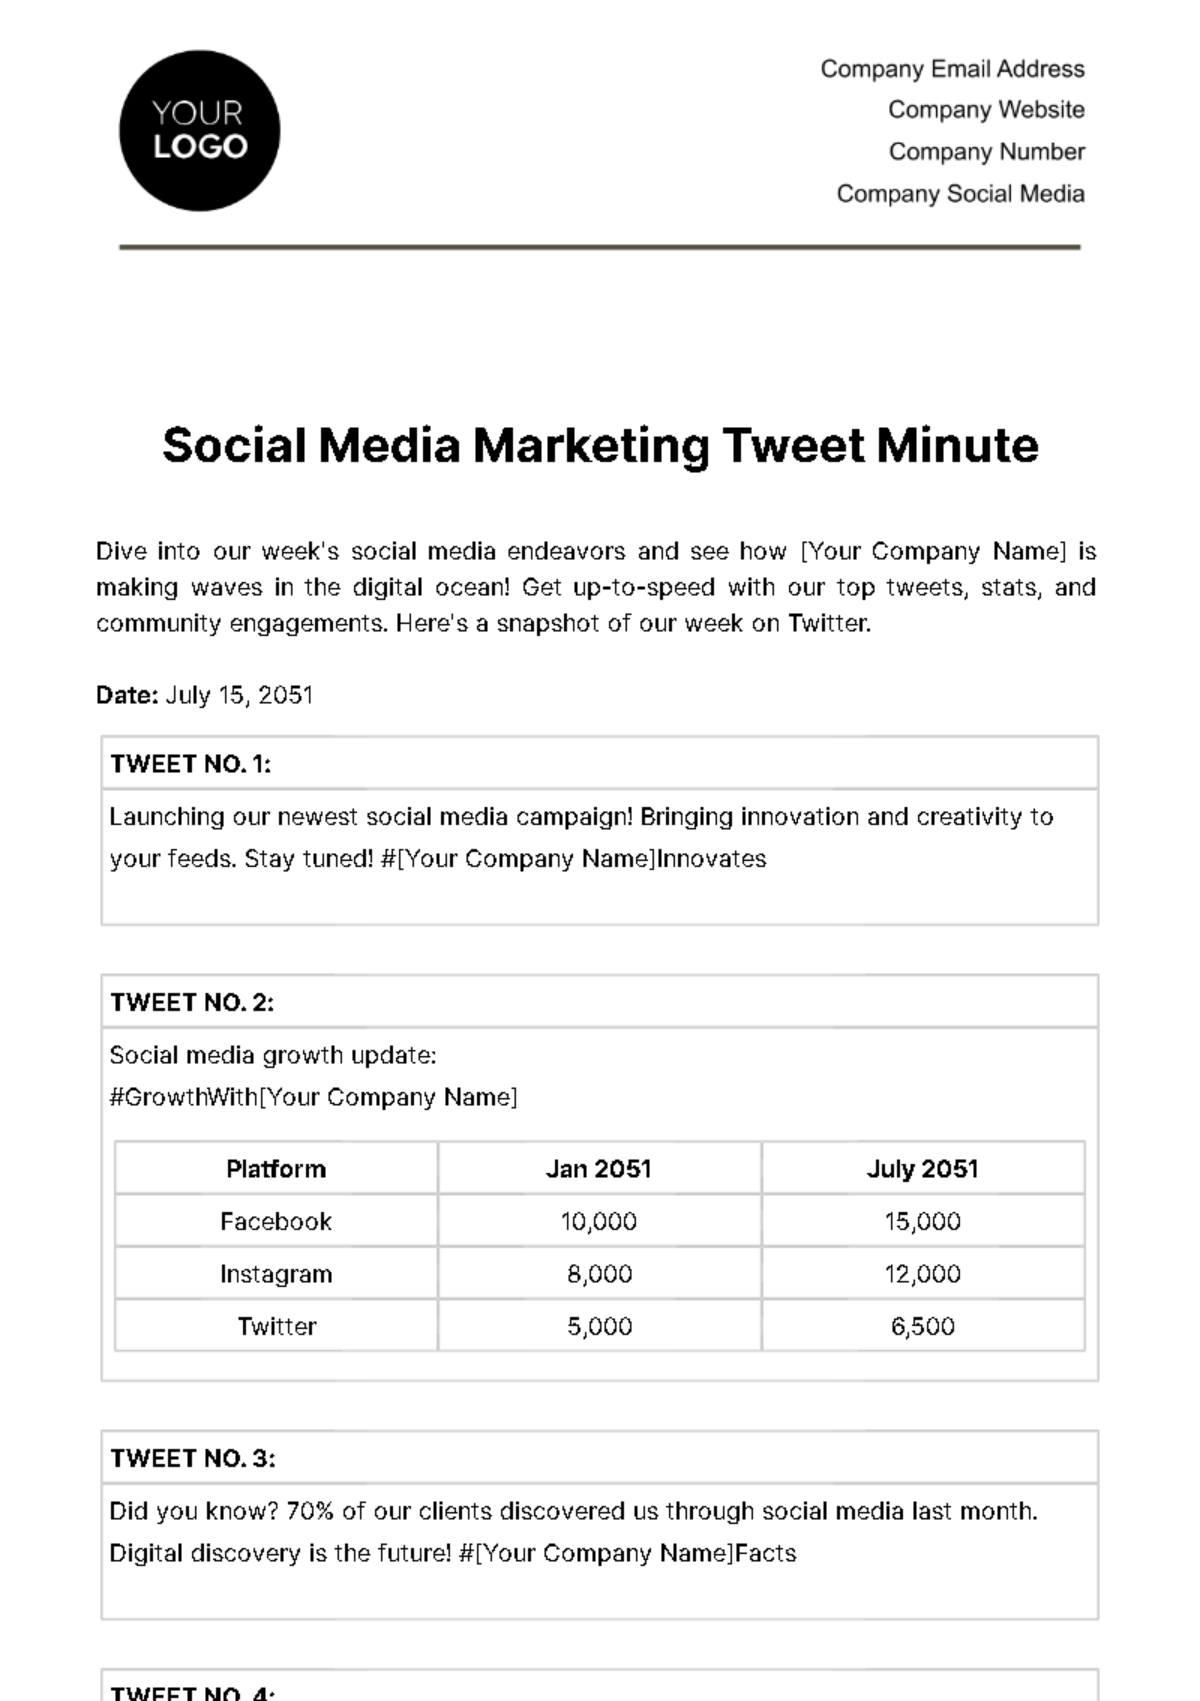 Social Media Marketing Tweet Minute Template